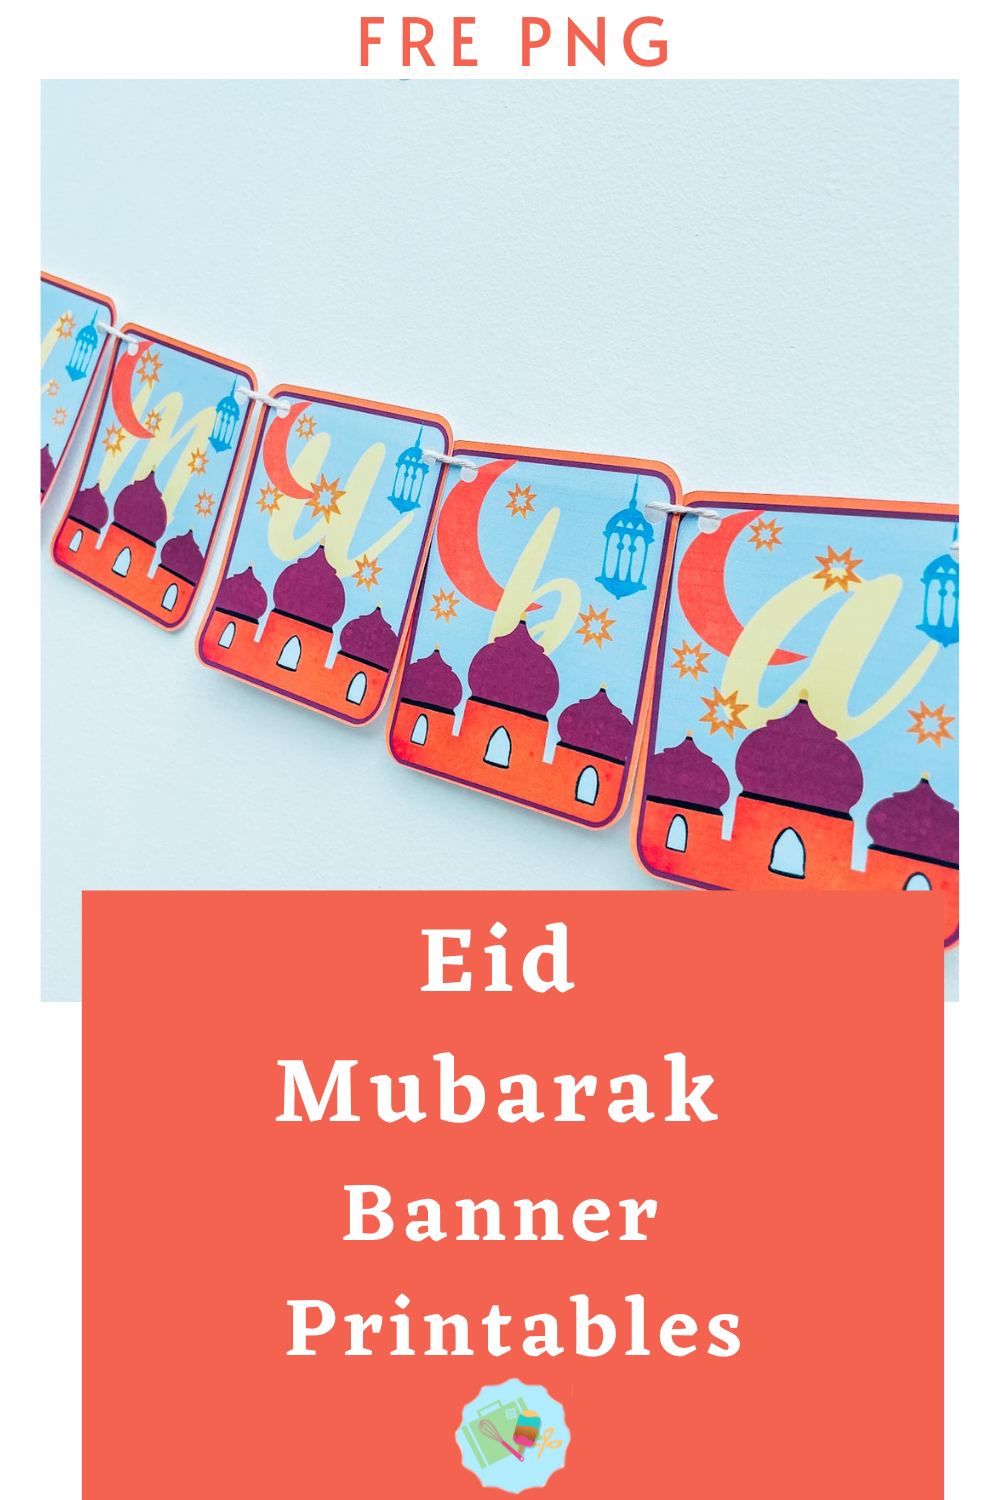 Free Eid Mubarak Banner Printables